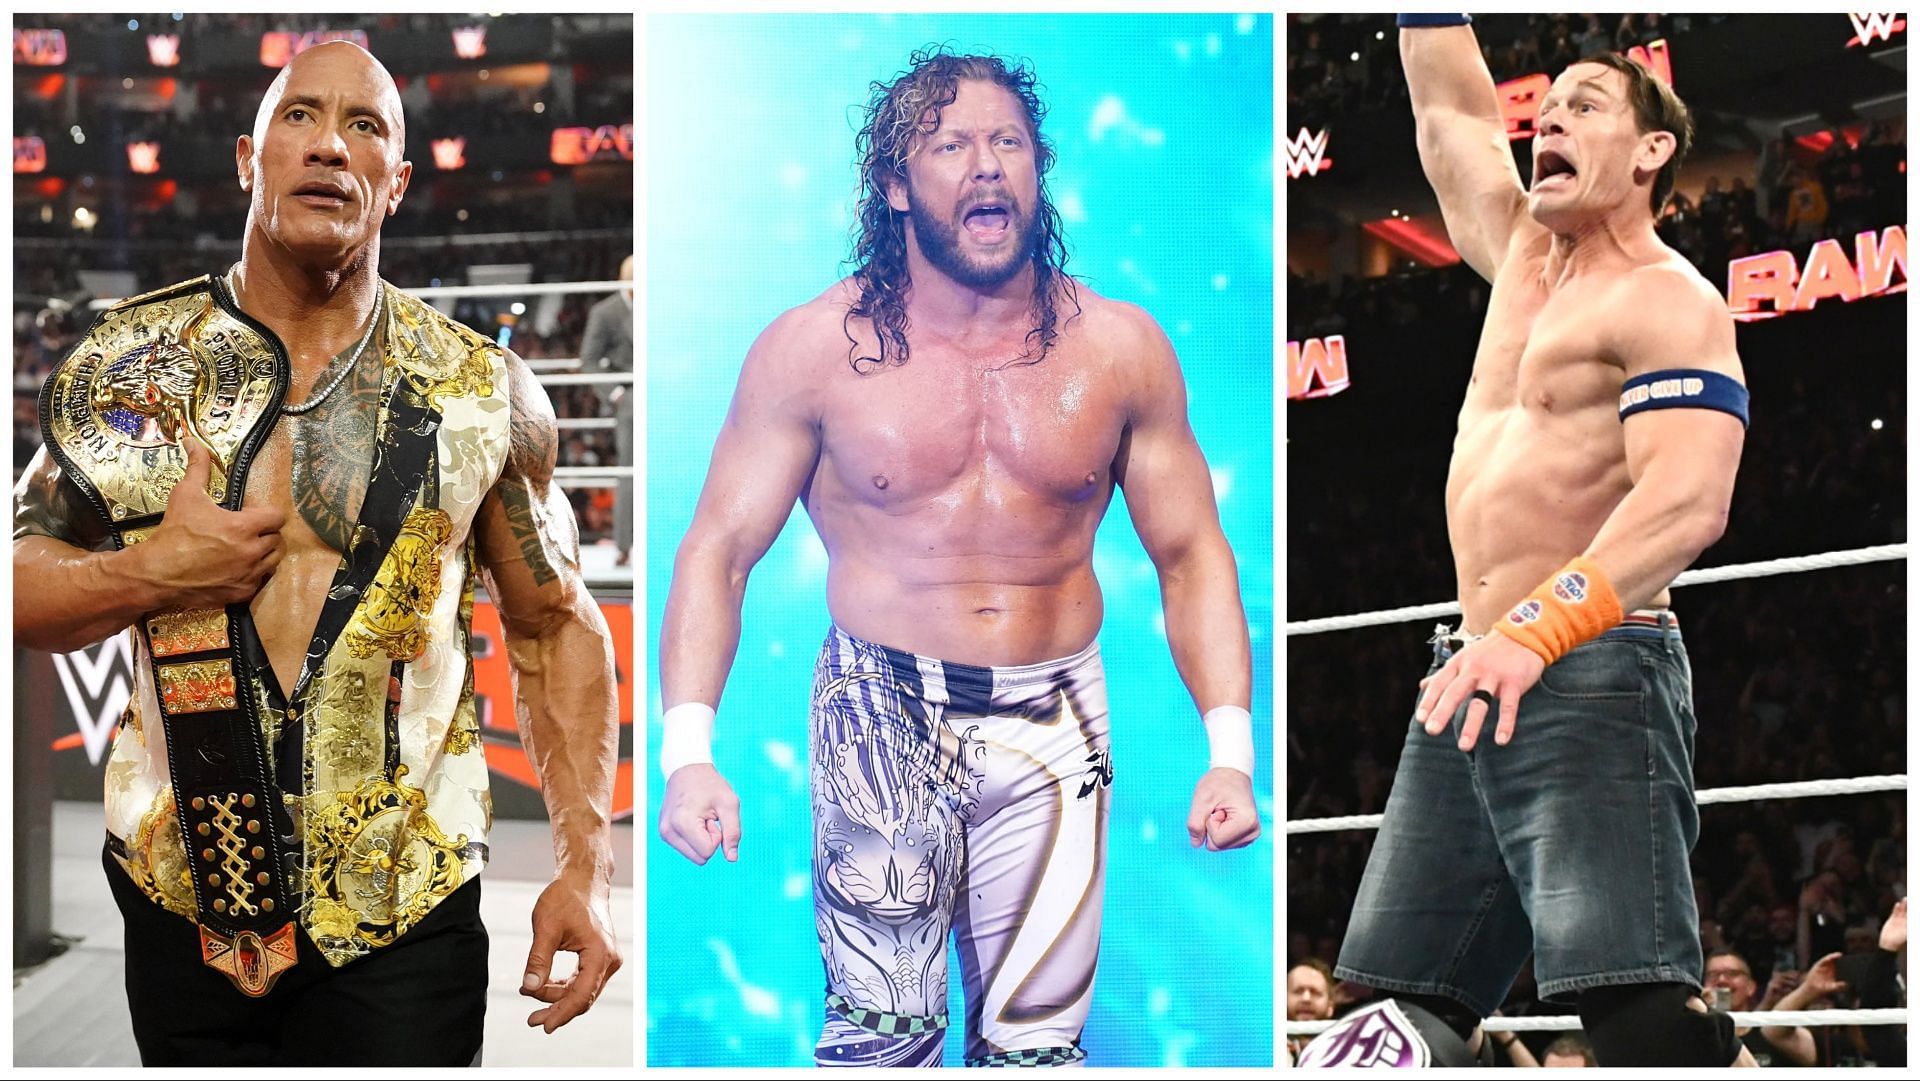 The Rock on WWE RAW, Kenny Omega on AEW Dynamite, John Cena on WWE RAW